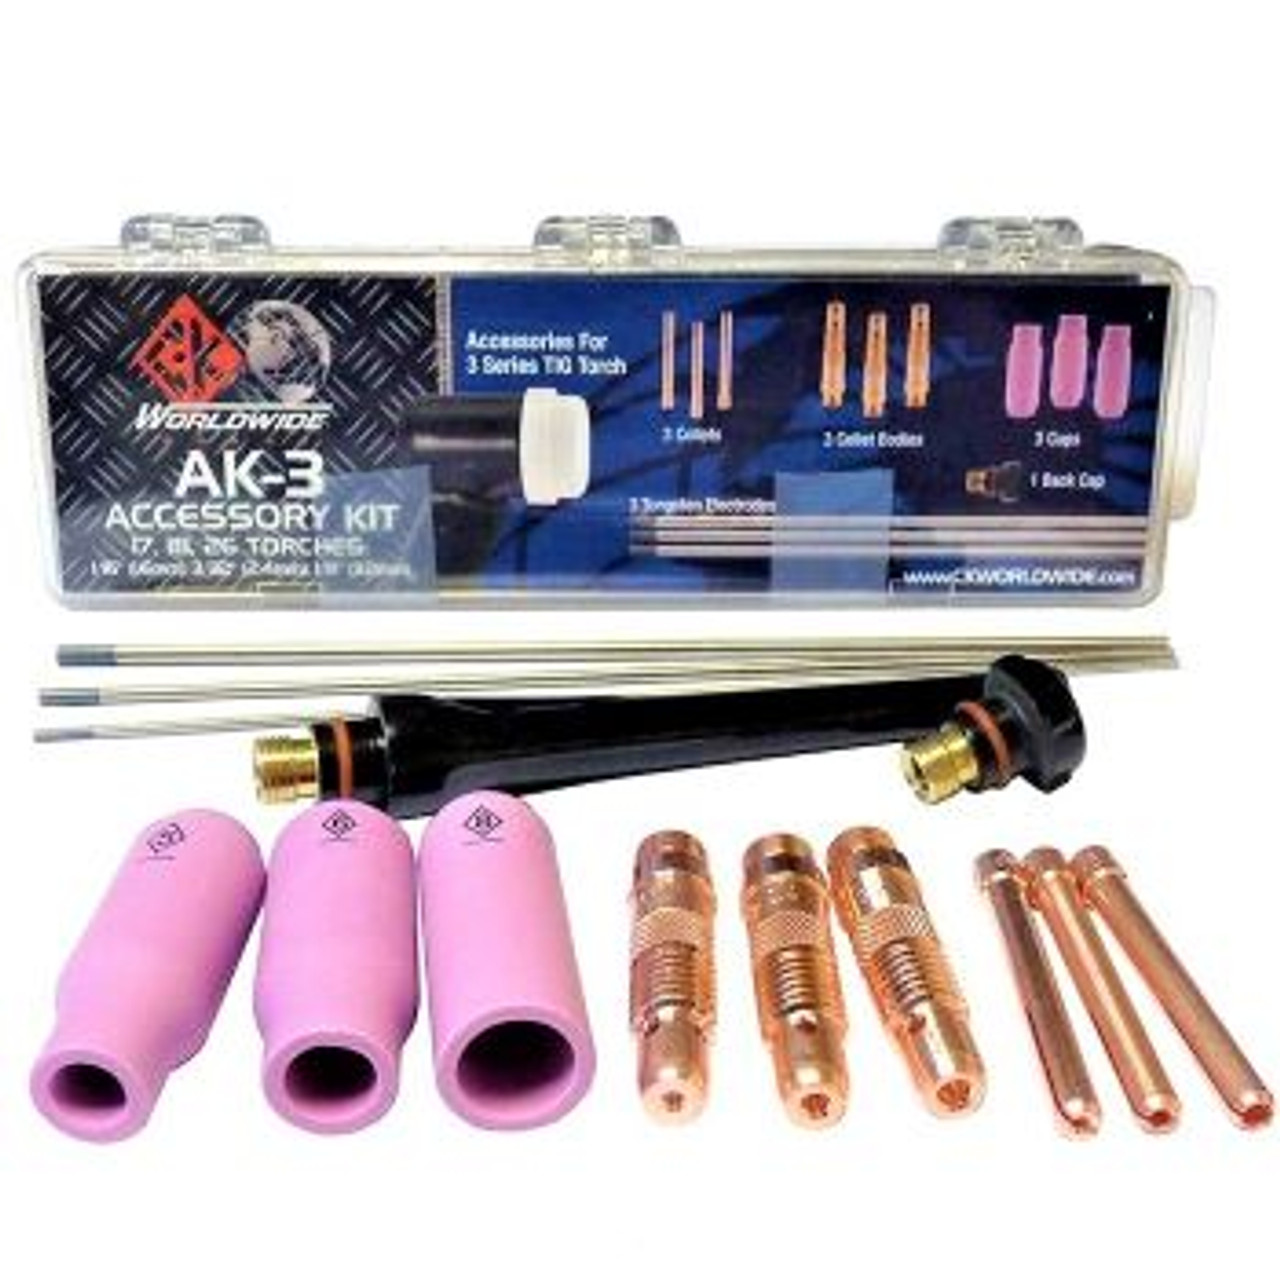 CK AK-3 Accessory Kit 3 Series Torches 17 18 26